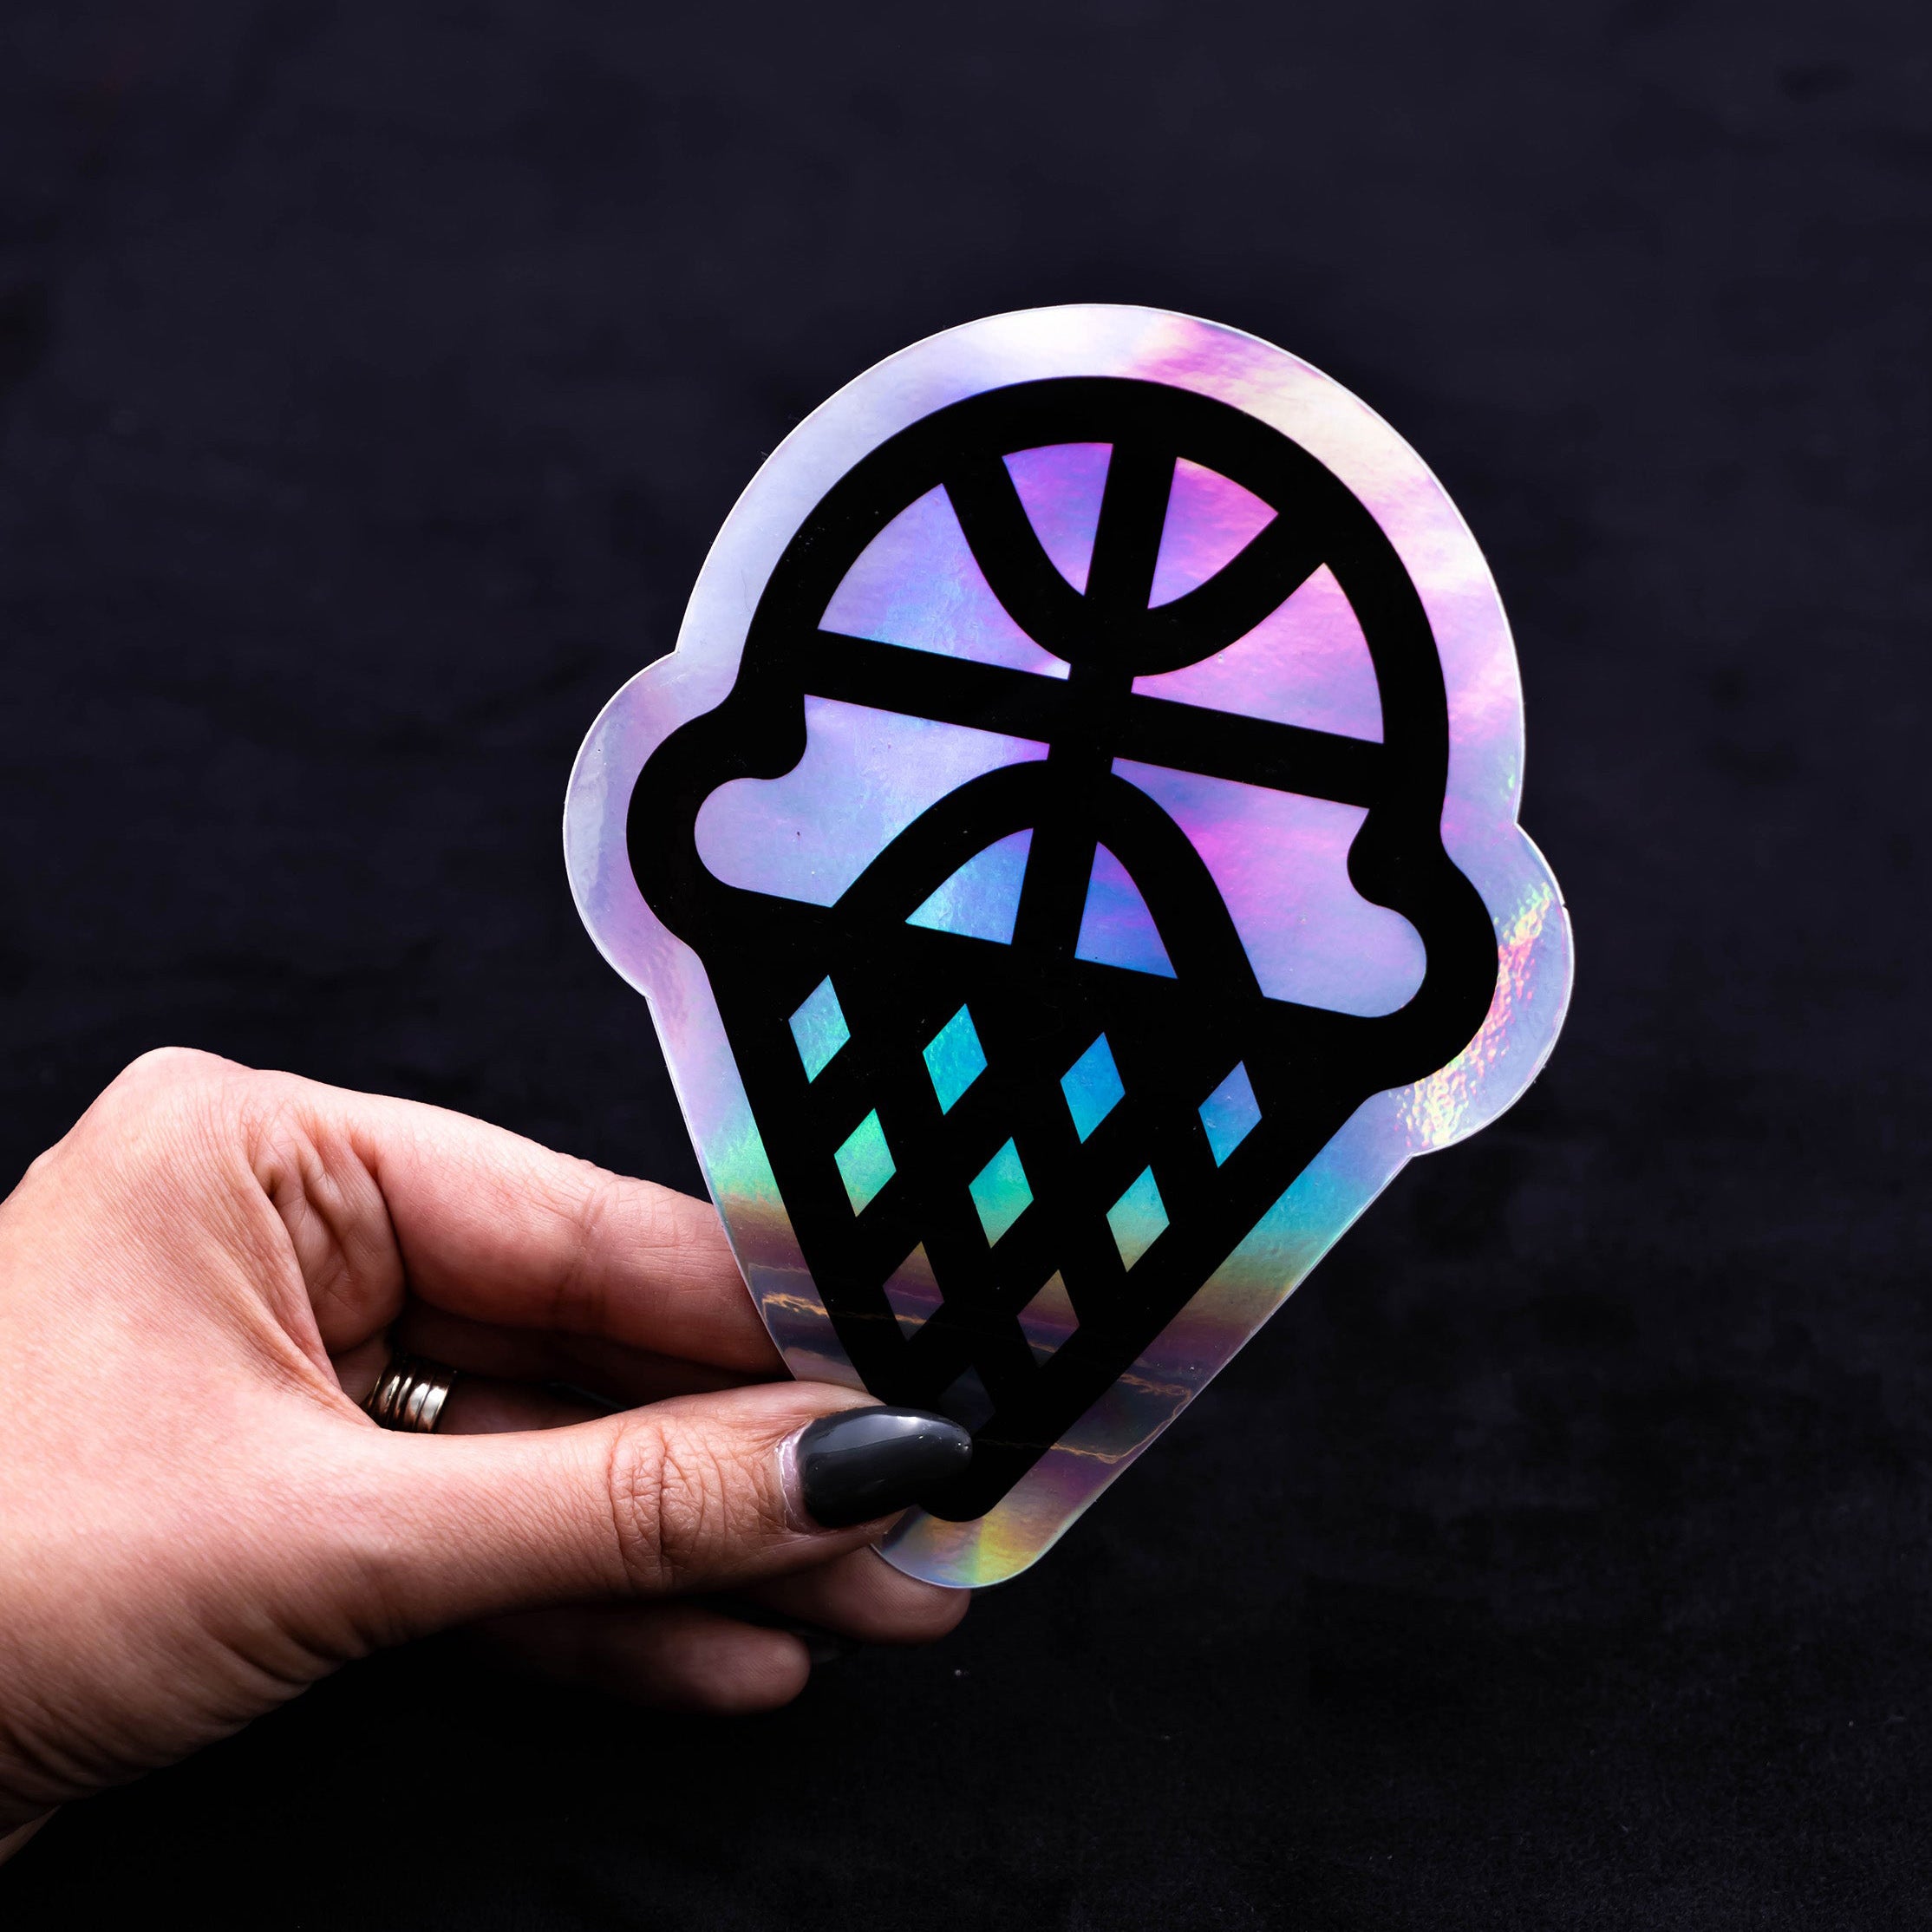 Custom 2.5 Iridescent Holographic Stickers - Sticky Brand